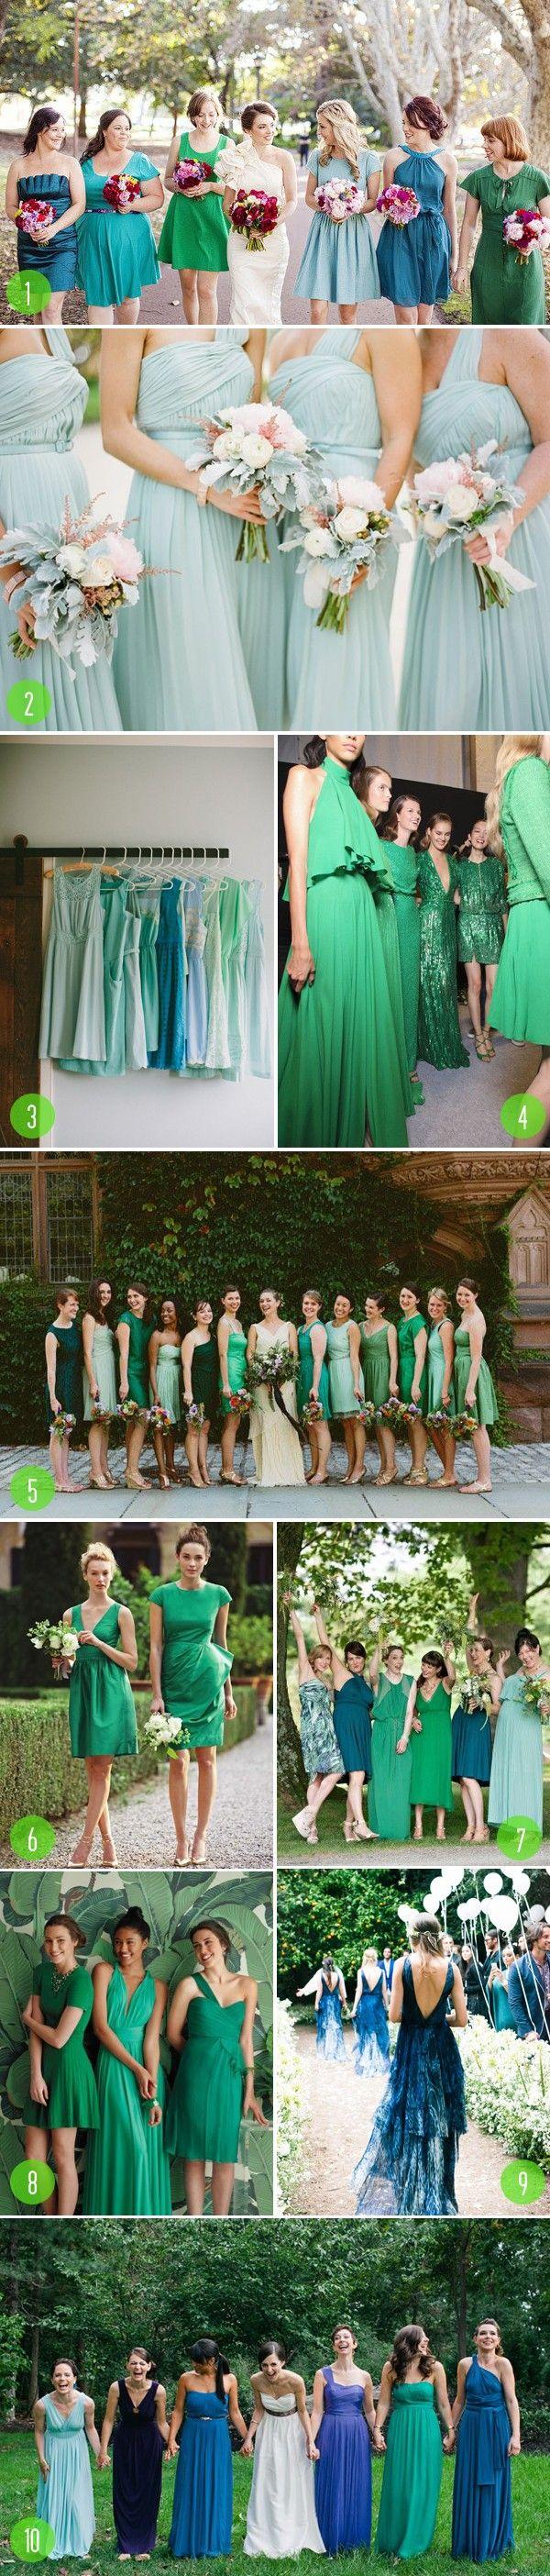 Hochzeit - Top 10: Cool Colored Bridesmaids Dresses